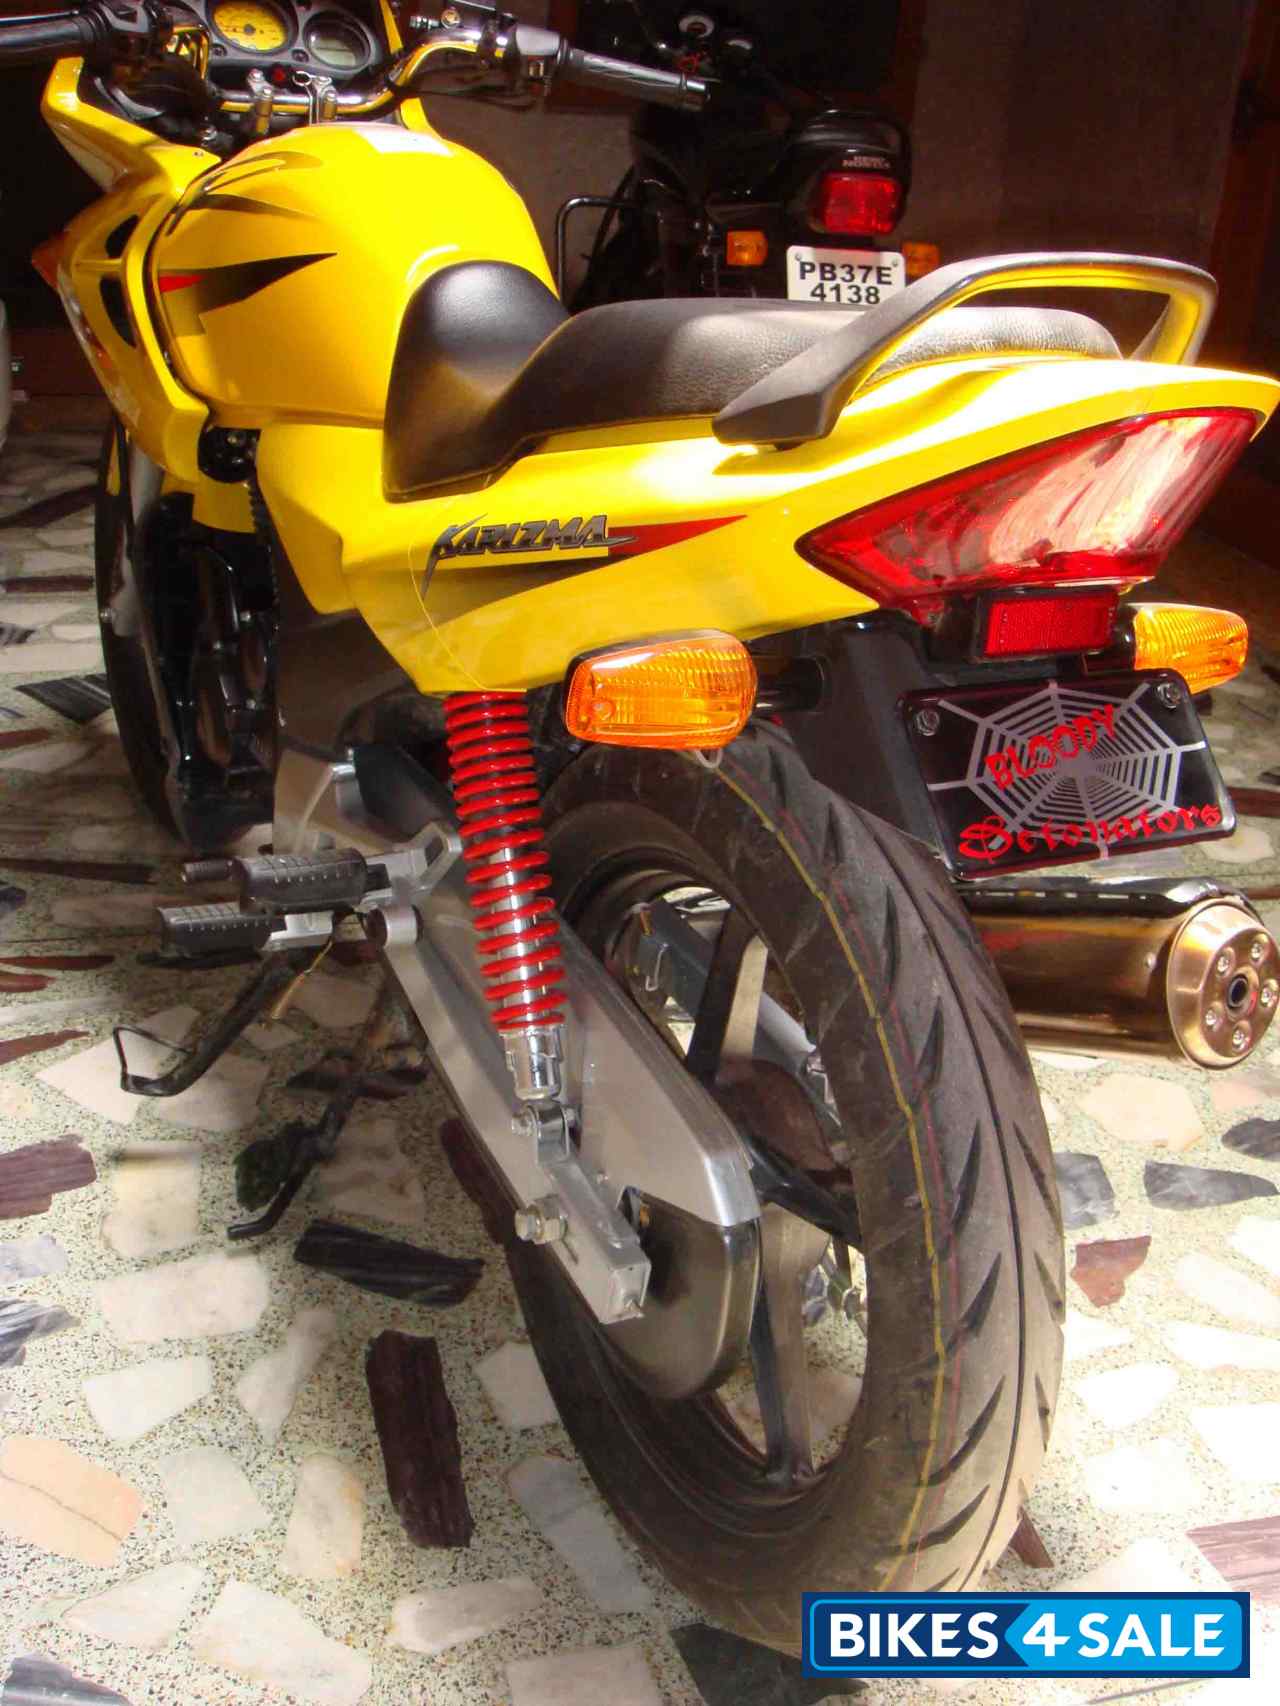 Used 09 Model Hero Karizma R For Sale In Jalandhar Id 194 Yellow Colour Bikes4sale